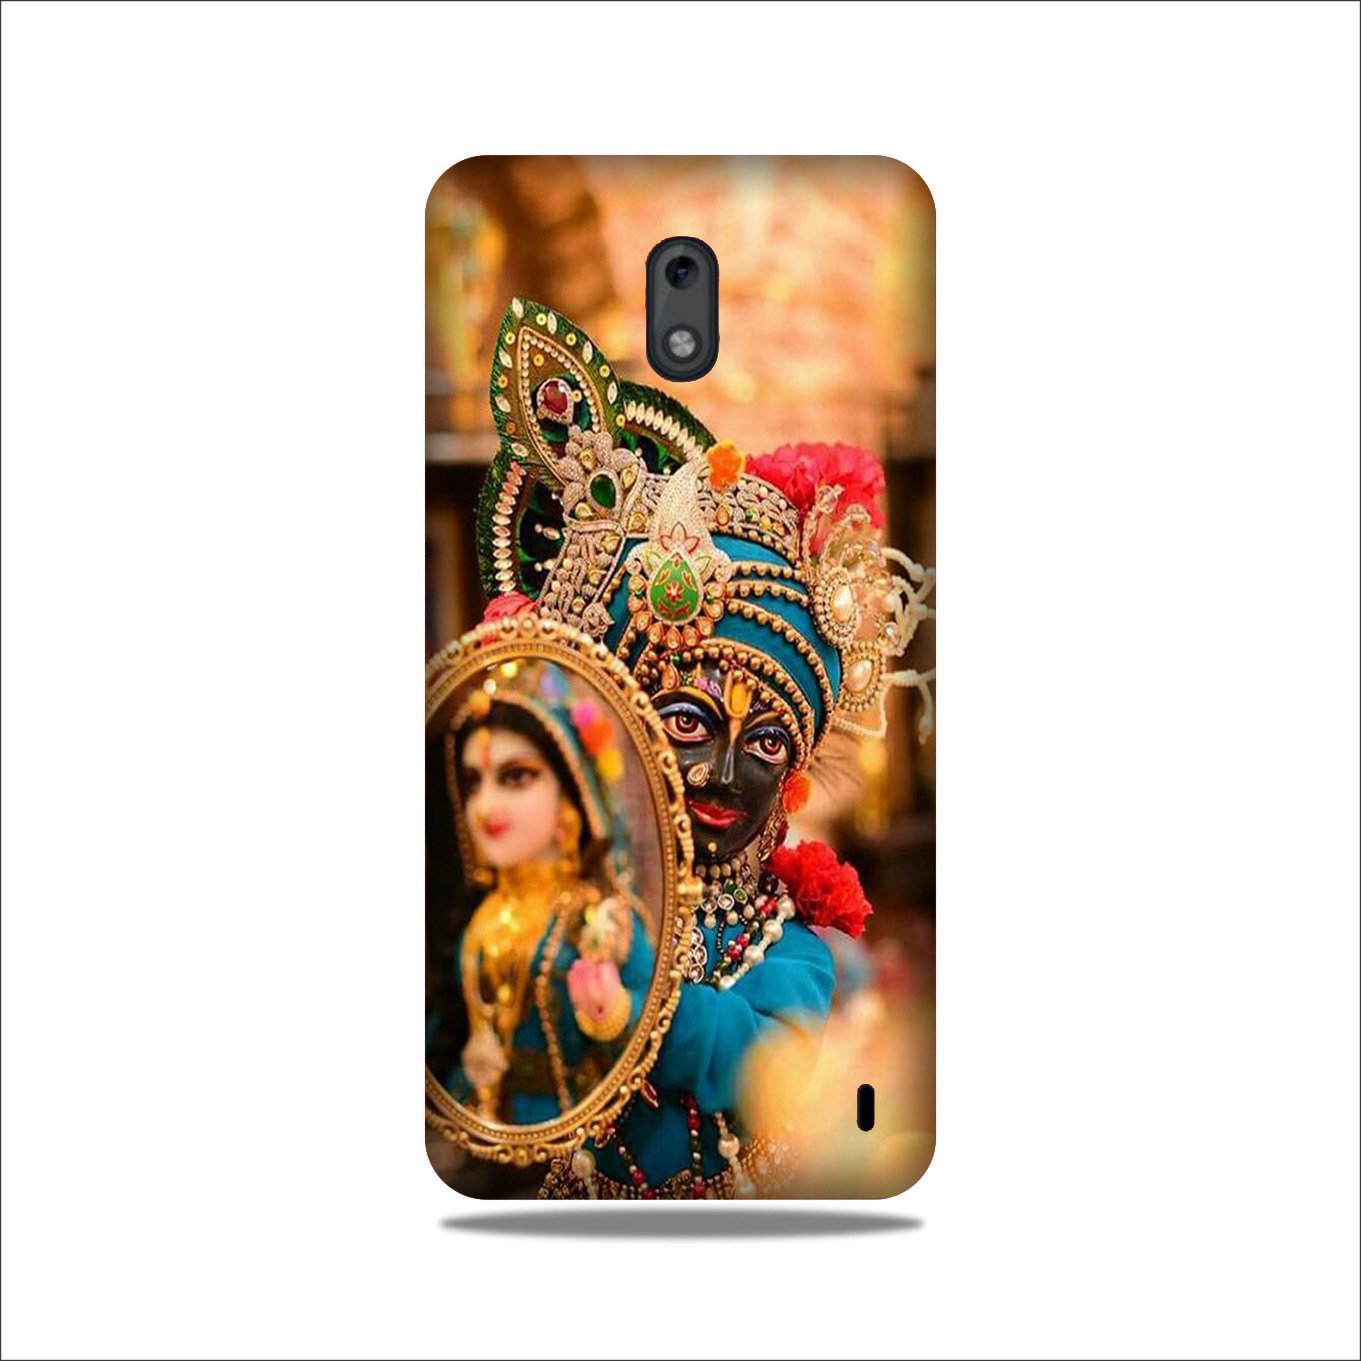 Lord Krishna5 Case for Nokia 2